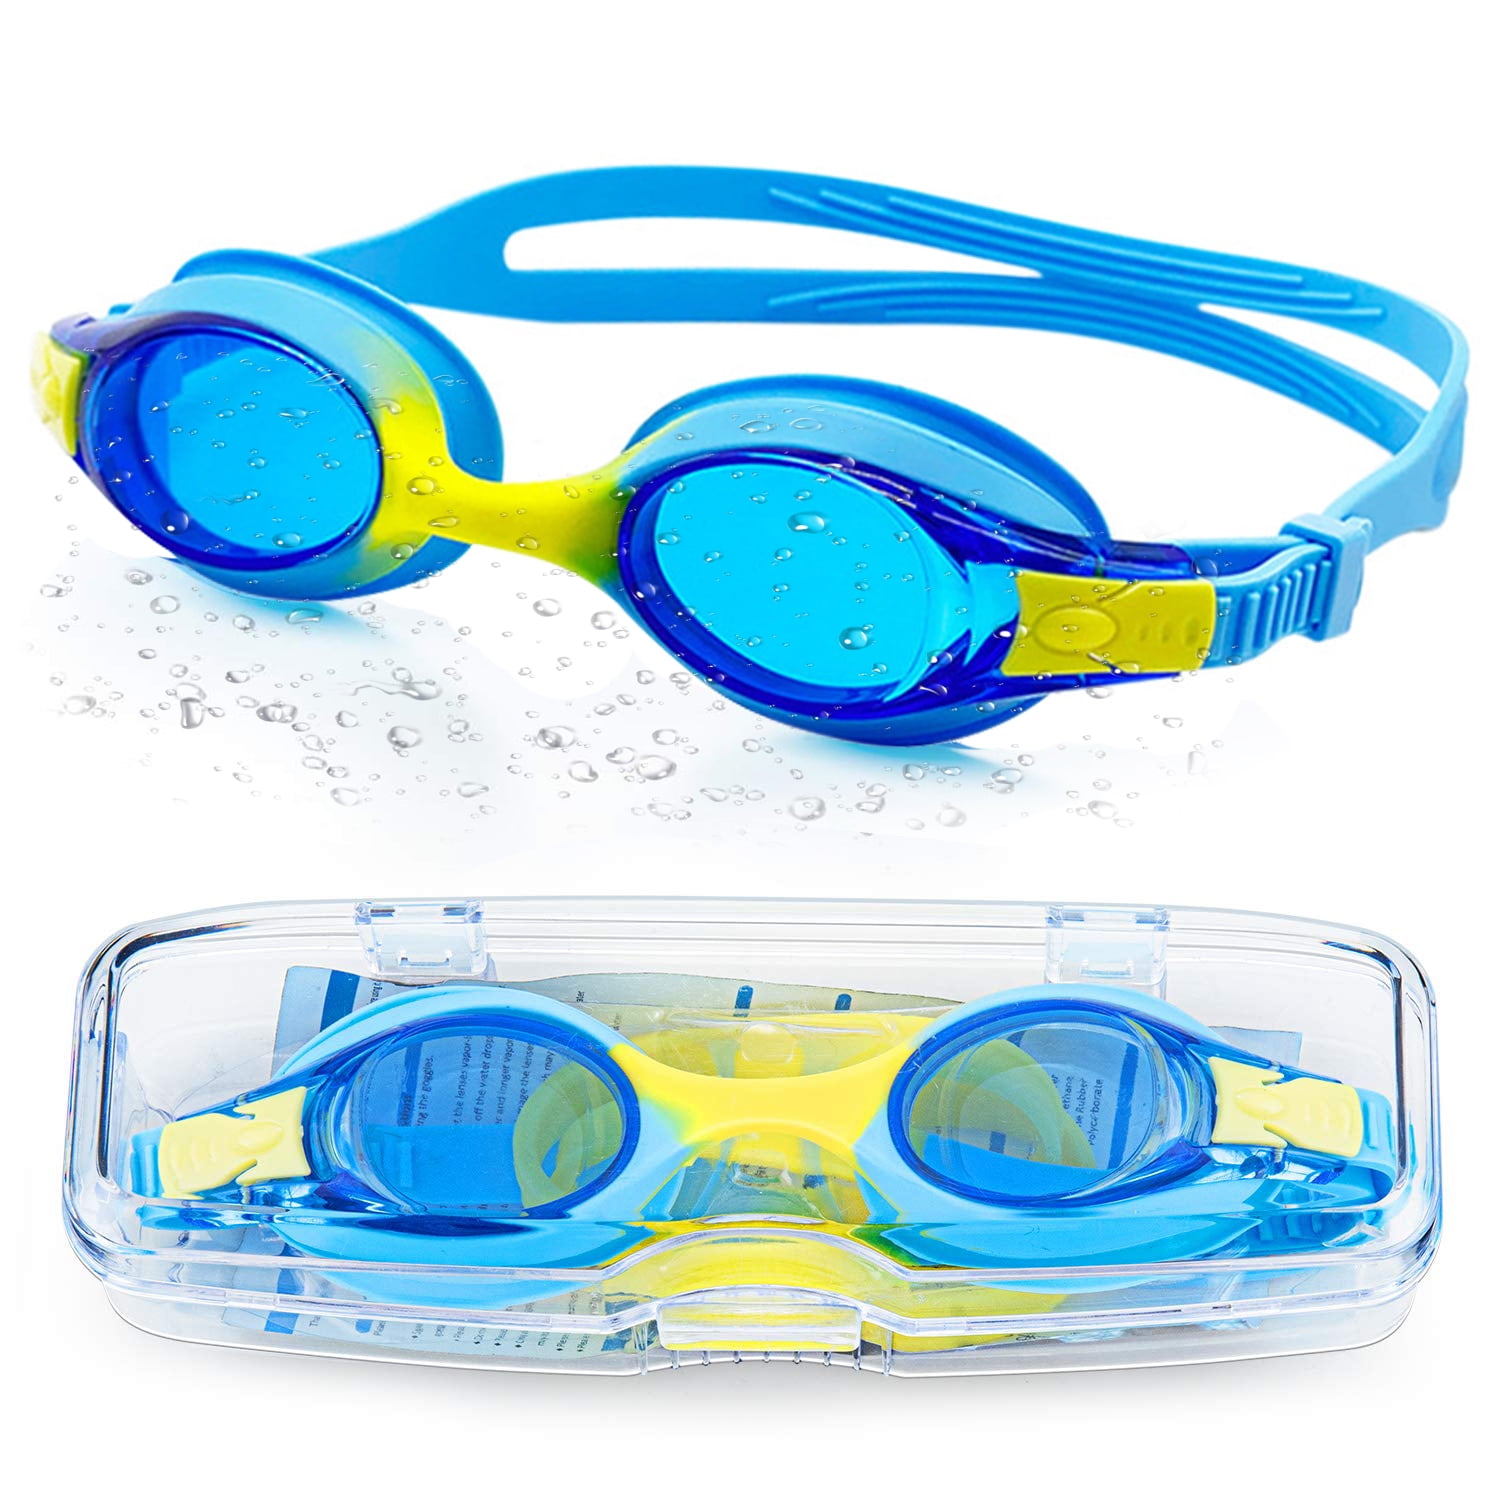 Anti-Fog, UV Protection, Crystal Clear Lens, No Leaking, Quick Strap Superhero Batman Swim Goggles Age 3-8 years Fun Swim Goggles for Boys and Girls - Swim Hero Kids Swimming Goggles 